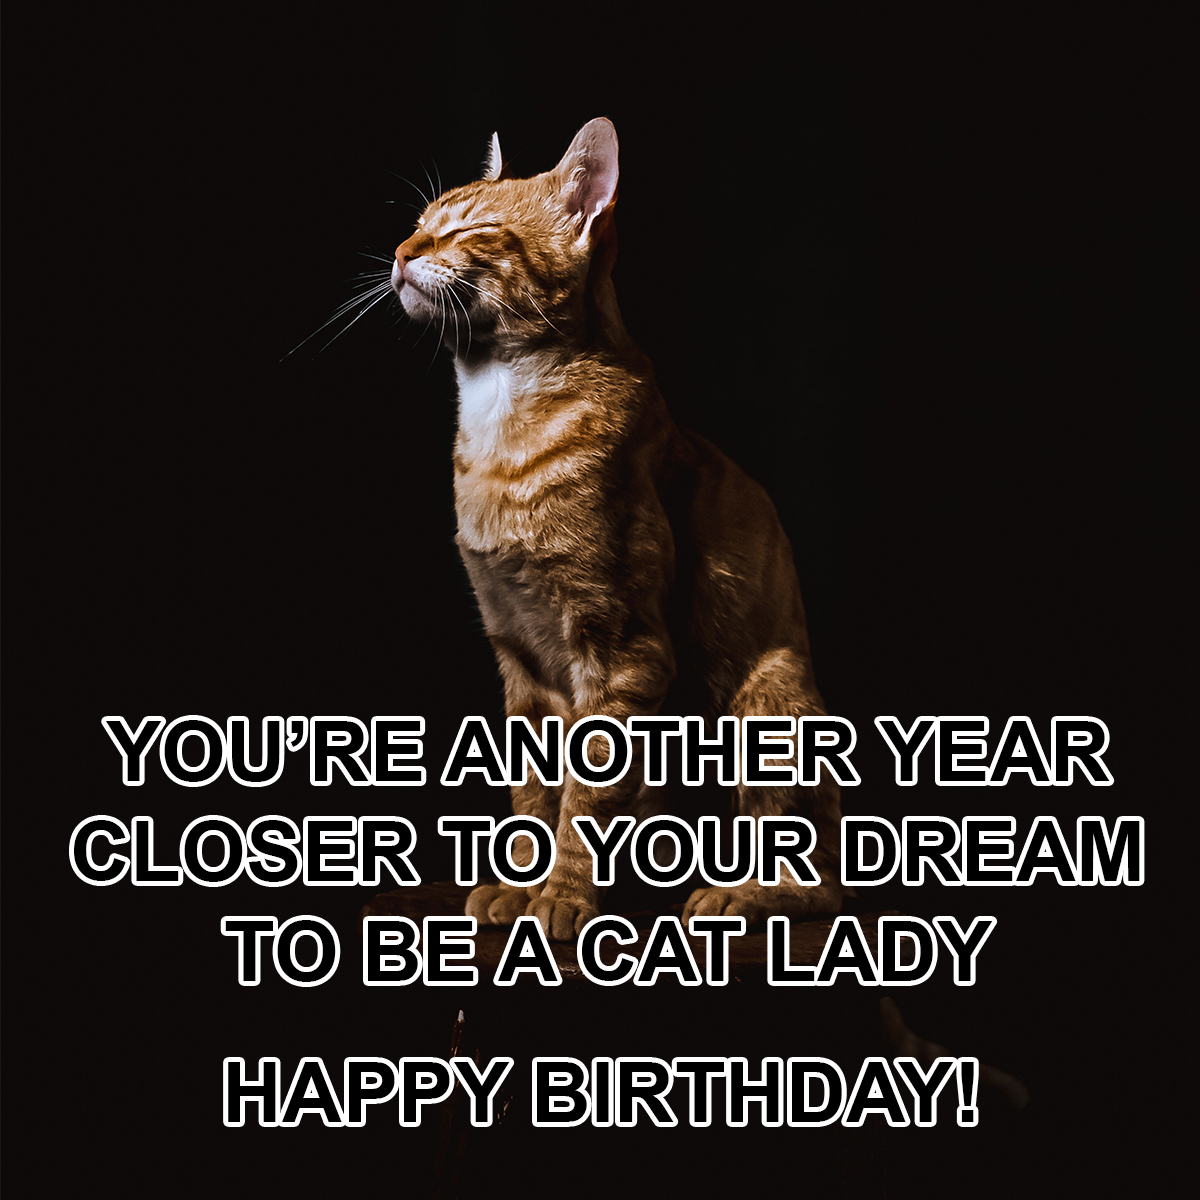 happy birthday friend funny cat